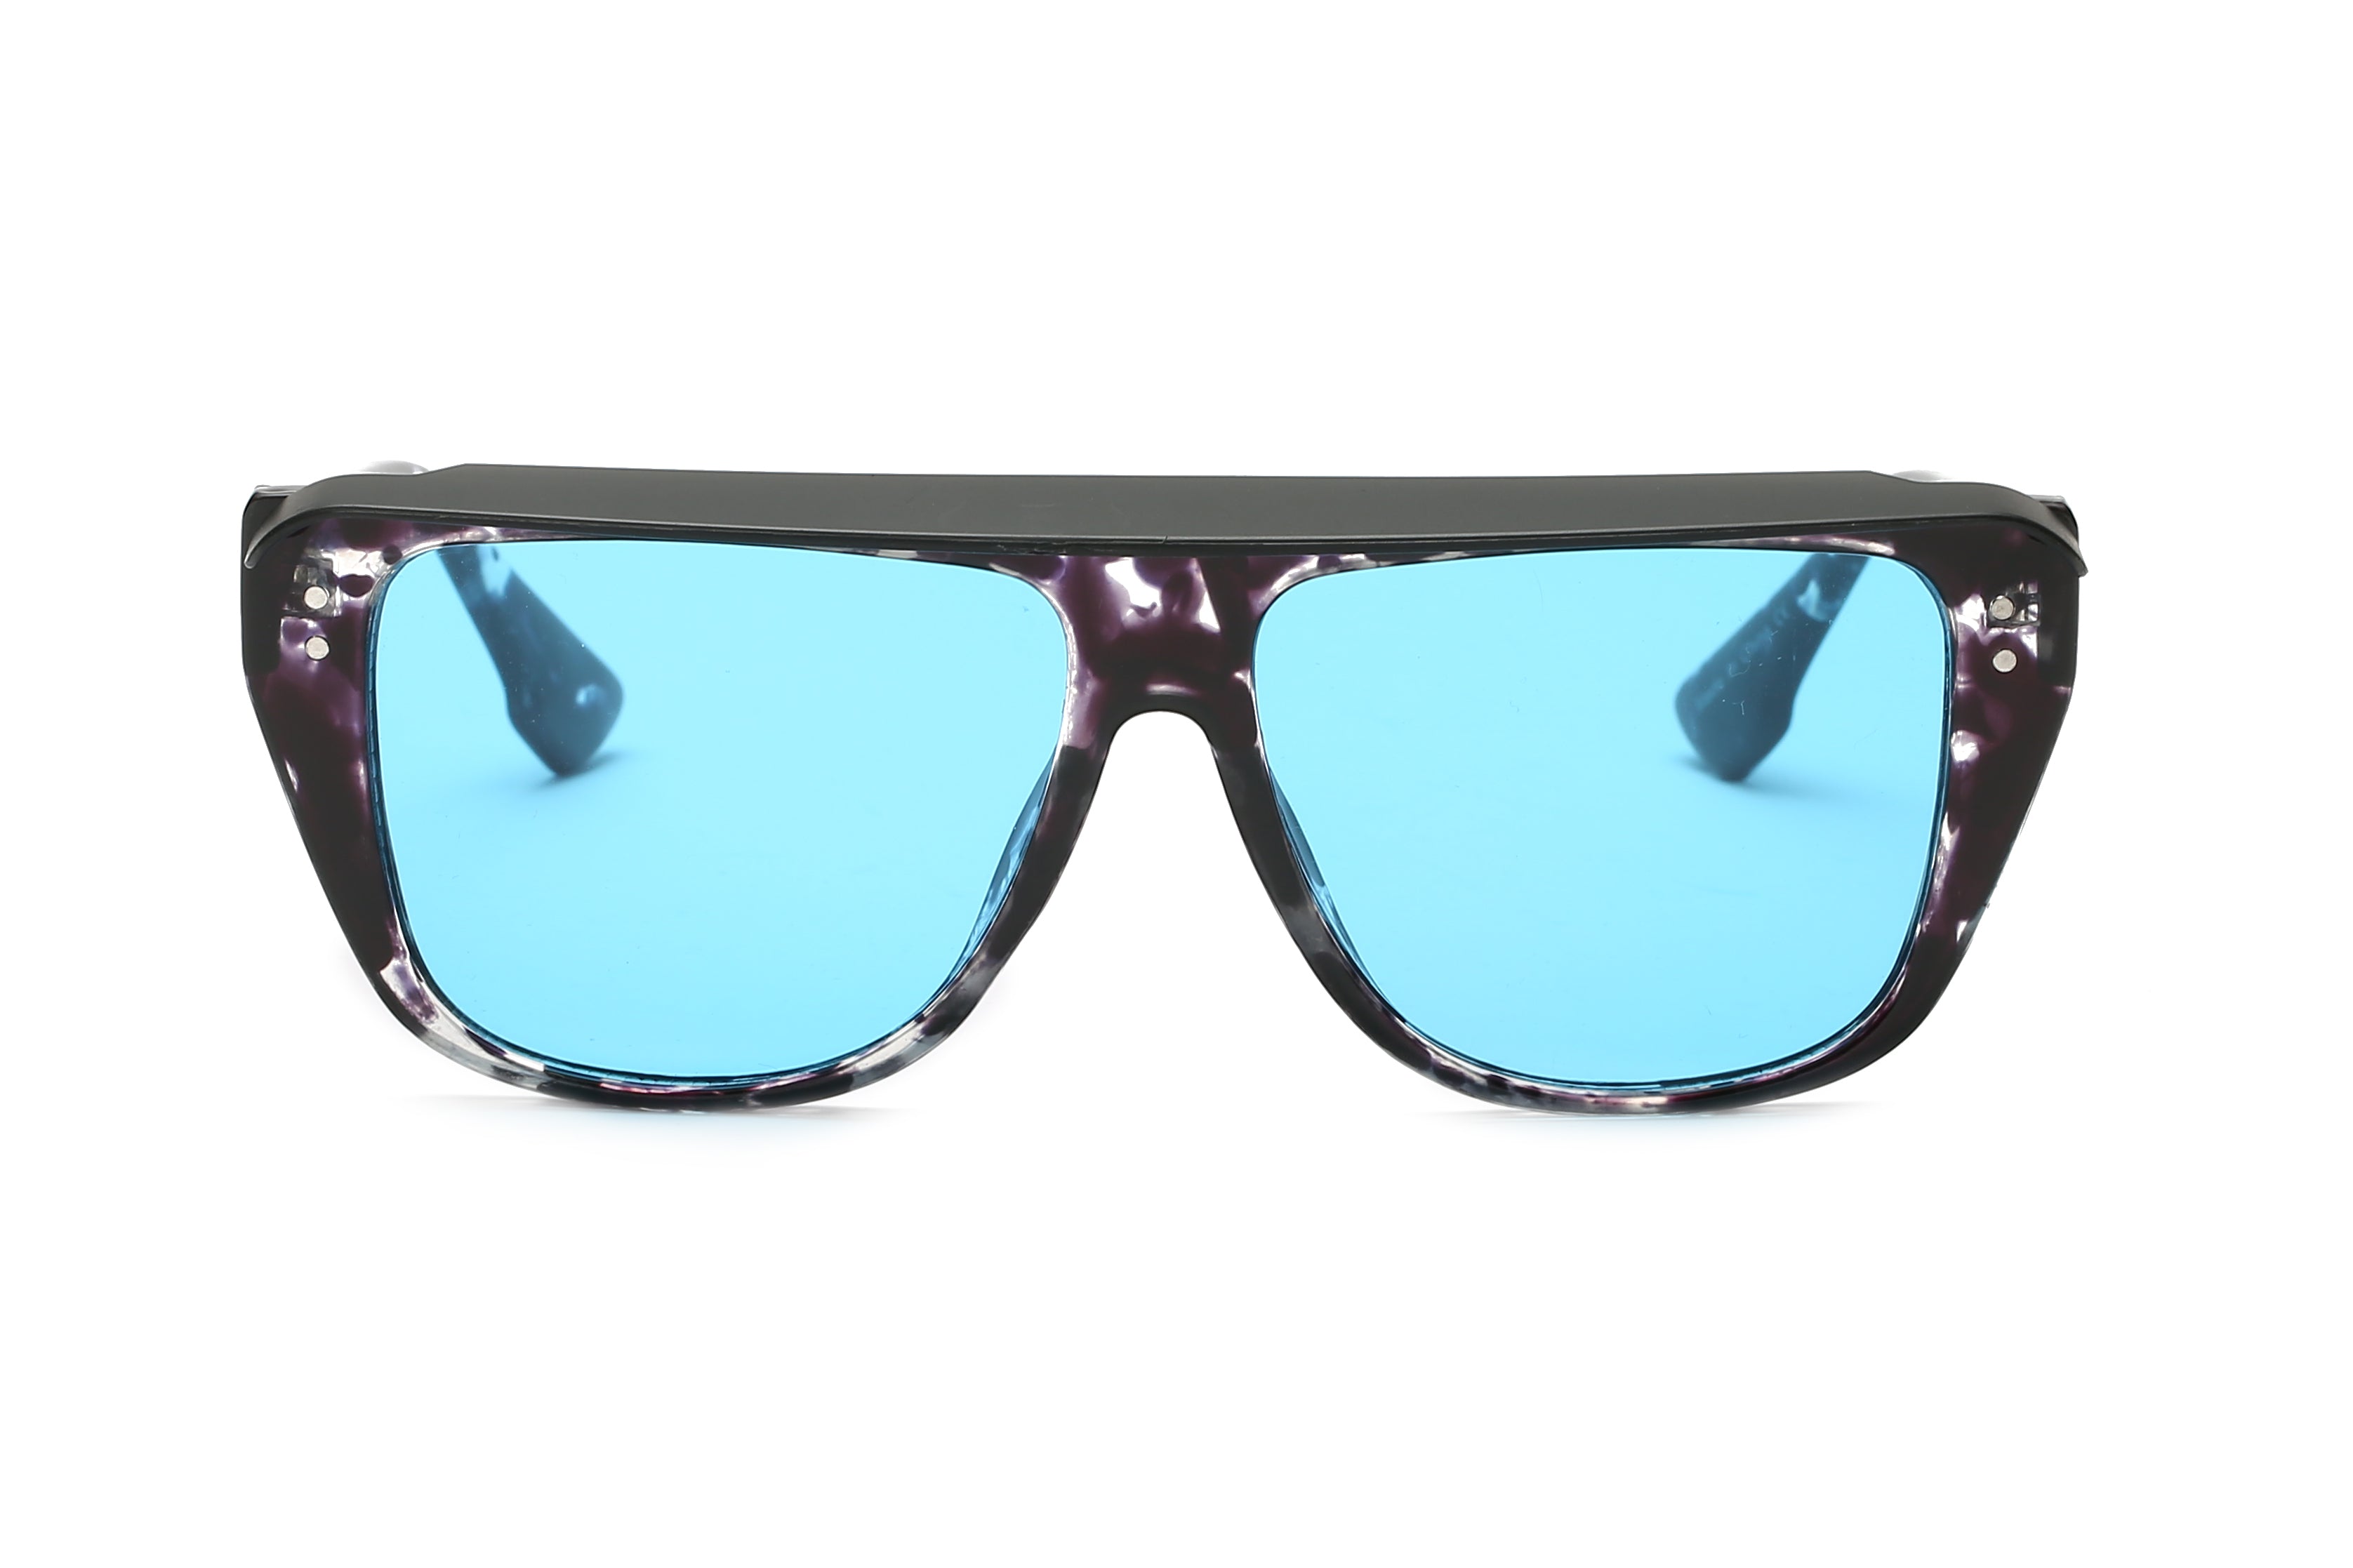 S1097 - Retro Vintage Shield Square Fashion Sunglasses Assorted/Mixed